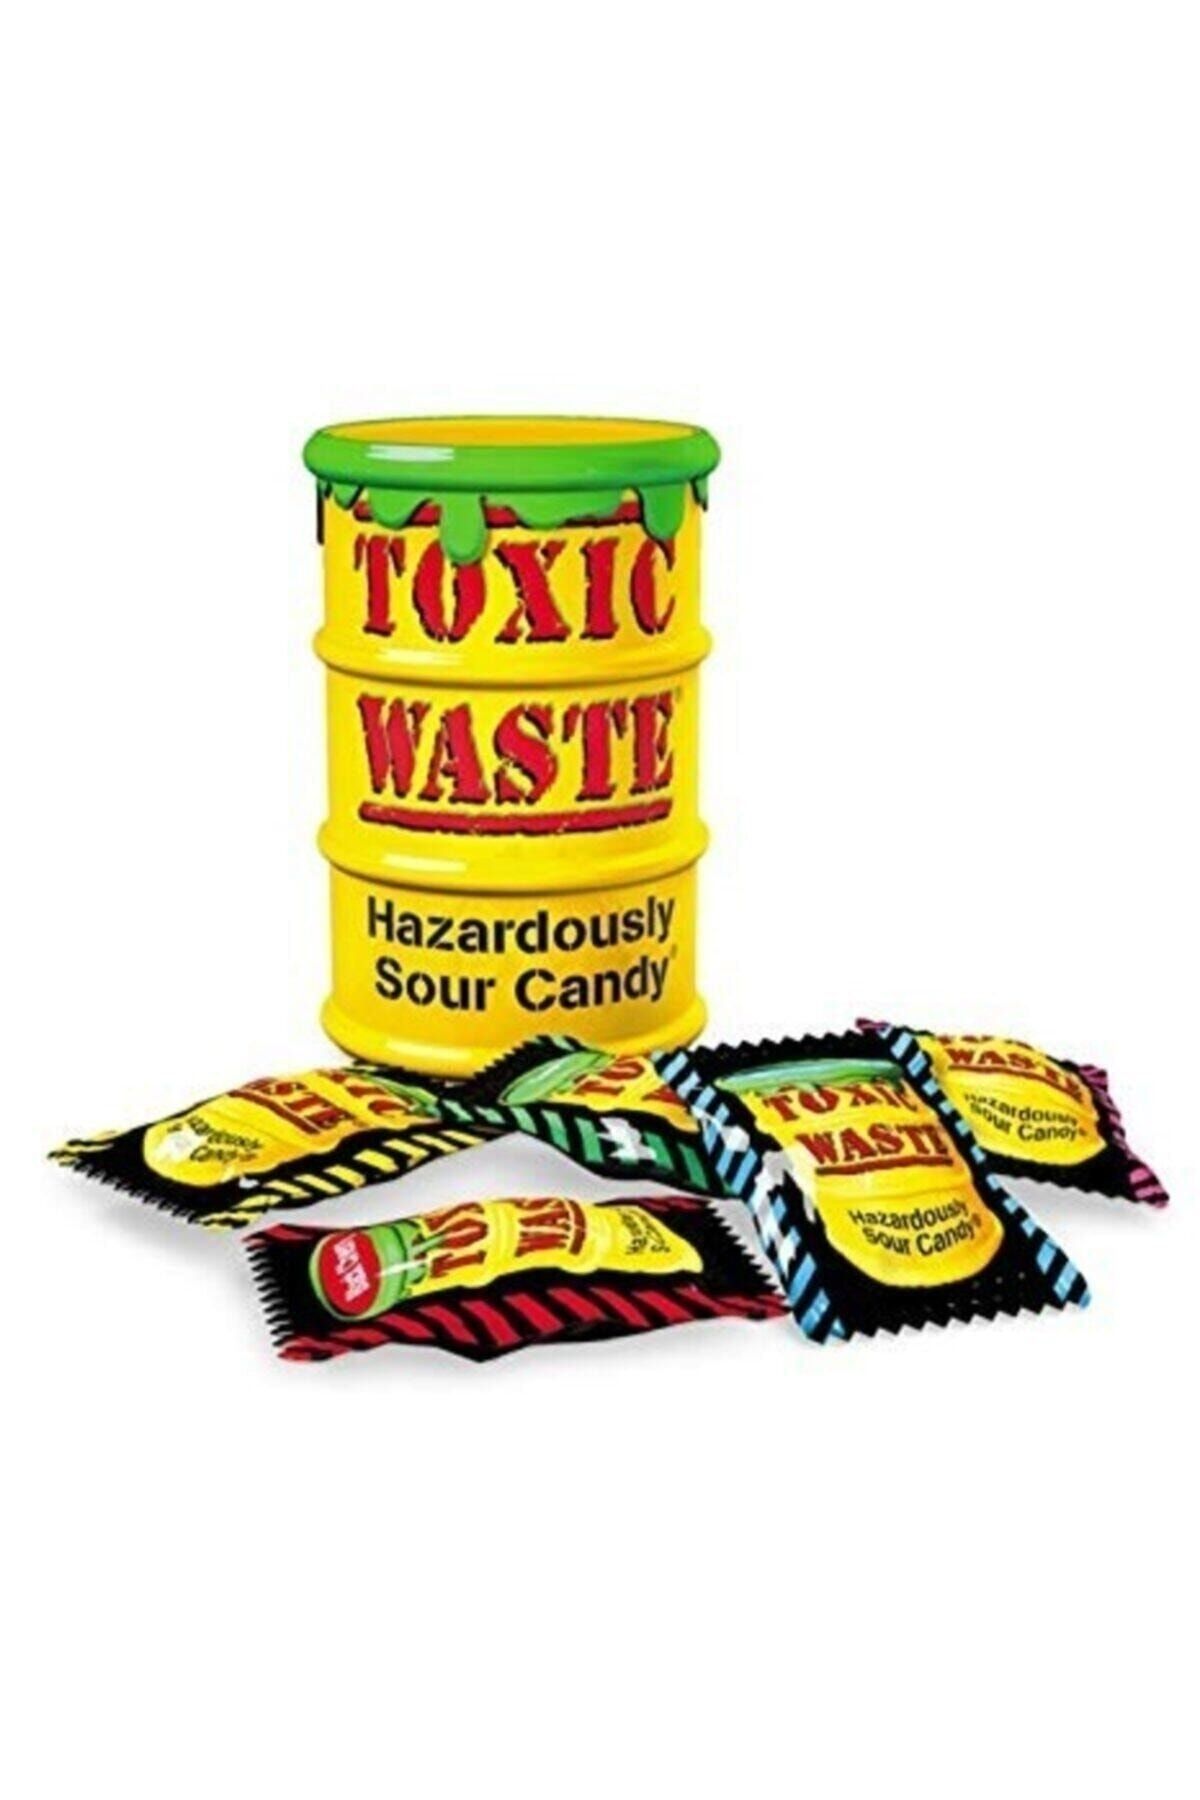 Токсик 5. Toxic waste желтая баночка 42гр.. Toxic waste конфеты. Кислые сладости Toxic waste. Леденцы Toxic waste.